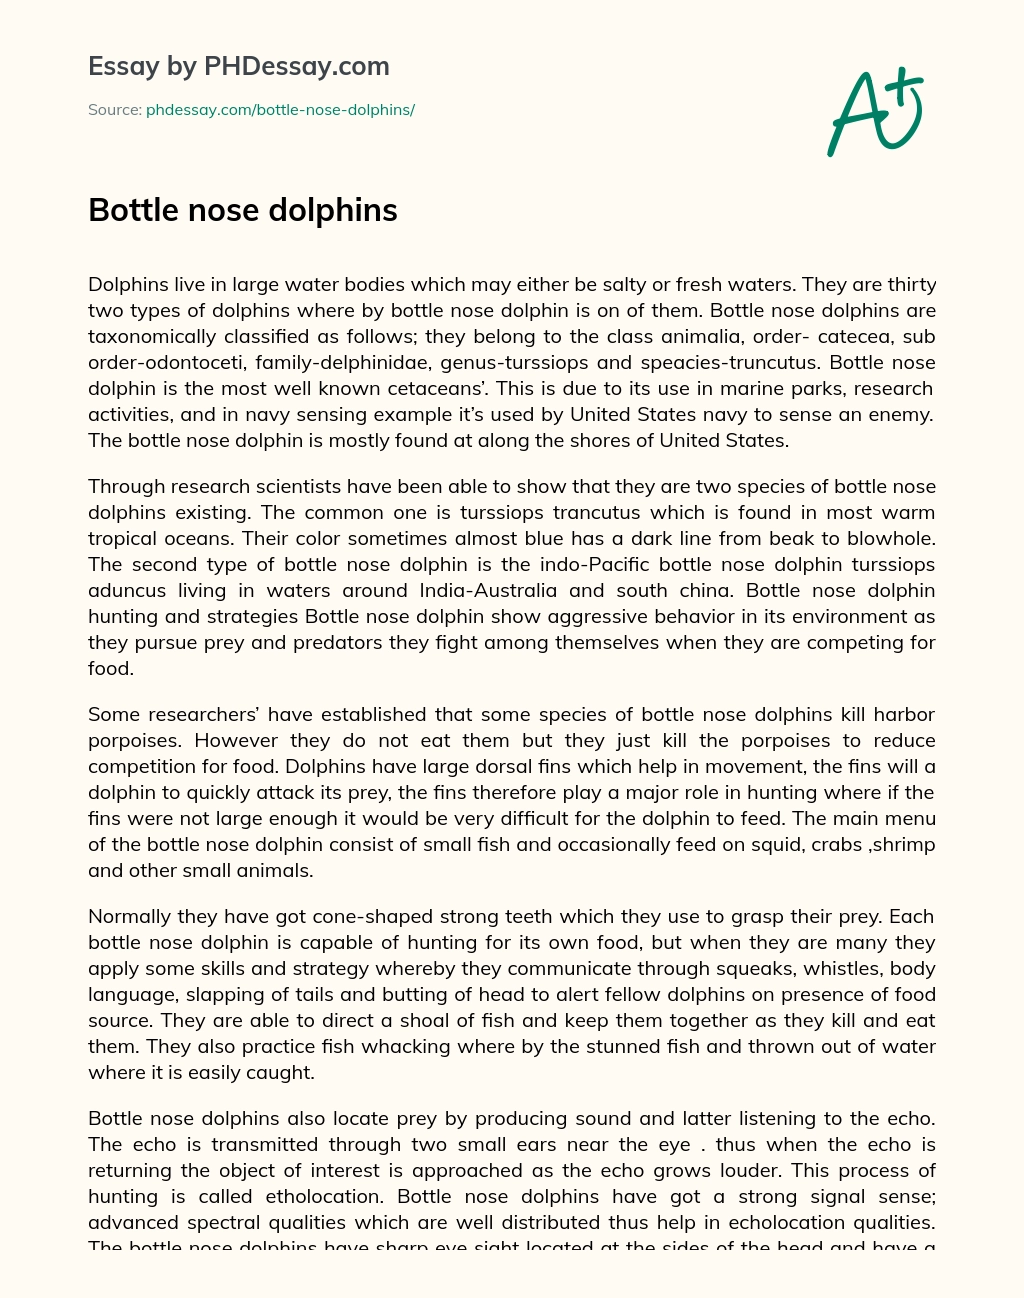 Bottle nose dolphins essay